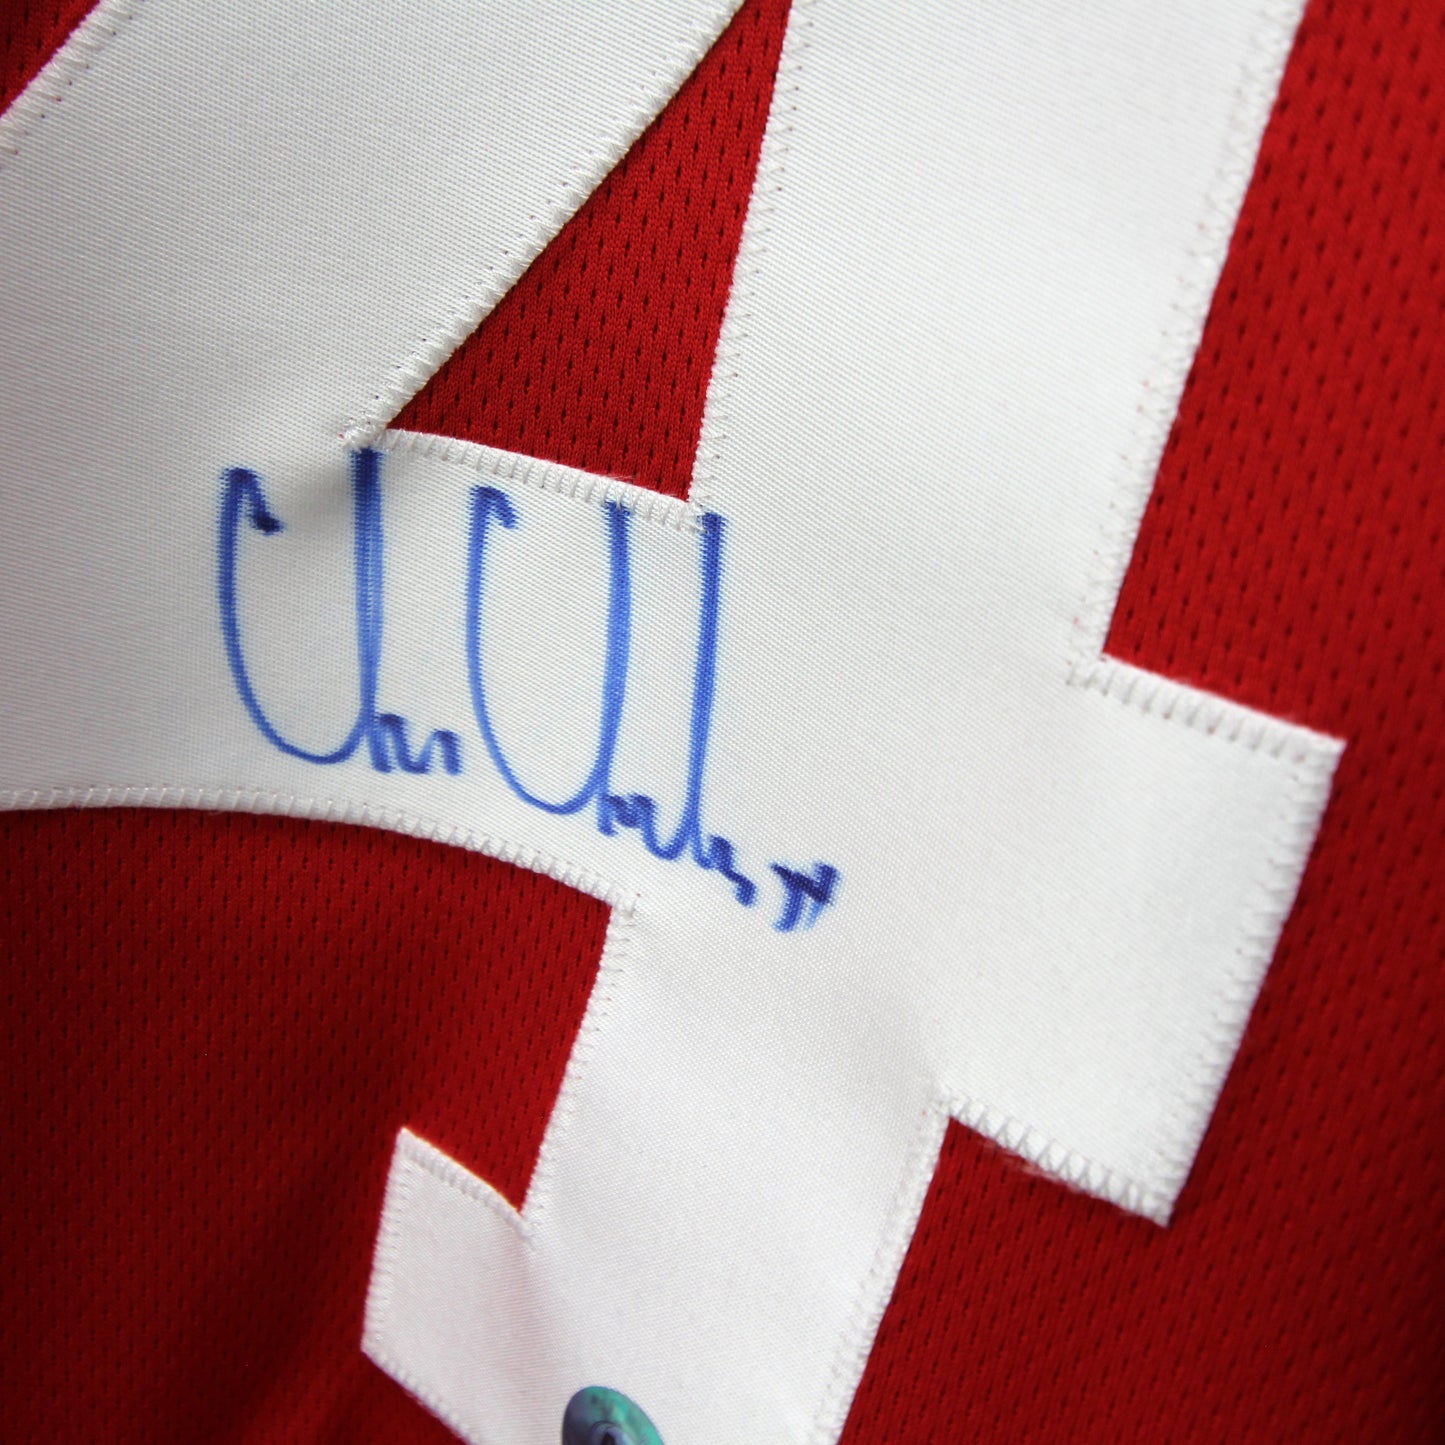 Chris Chelios - Red Wings - Autographed Jersey / Chandail autographié